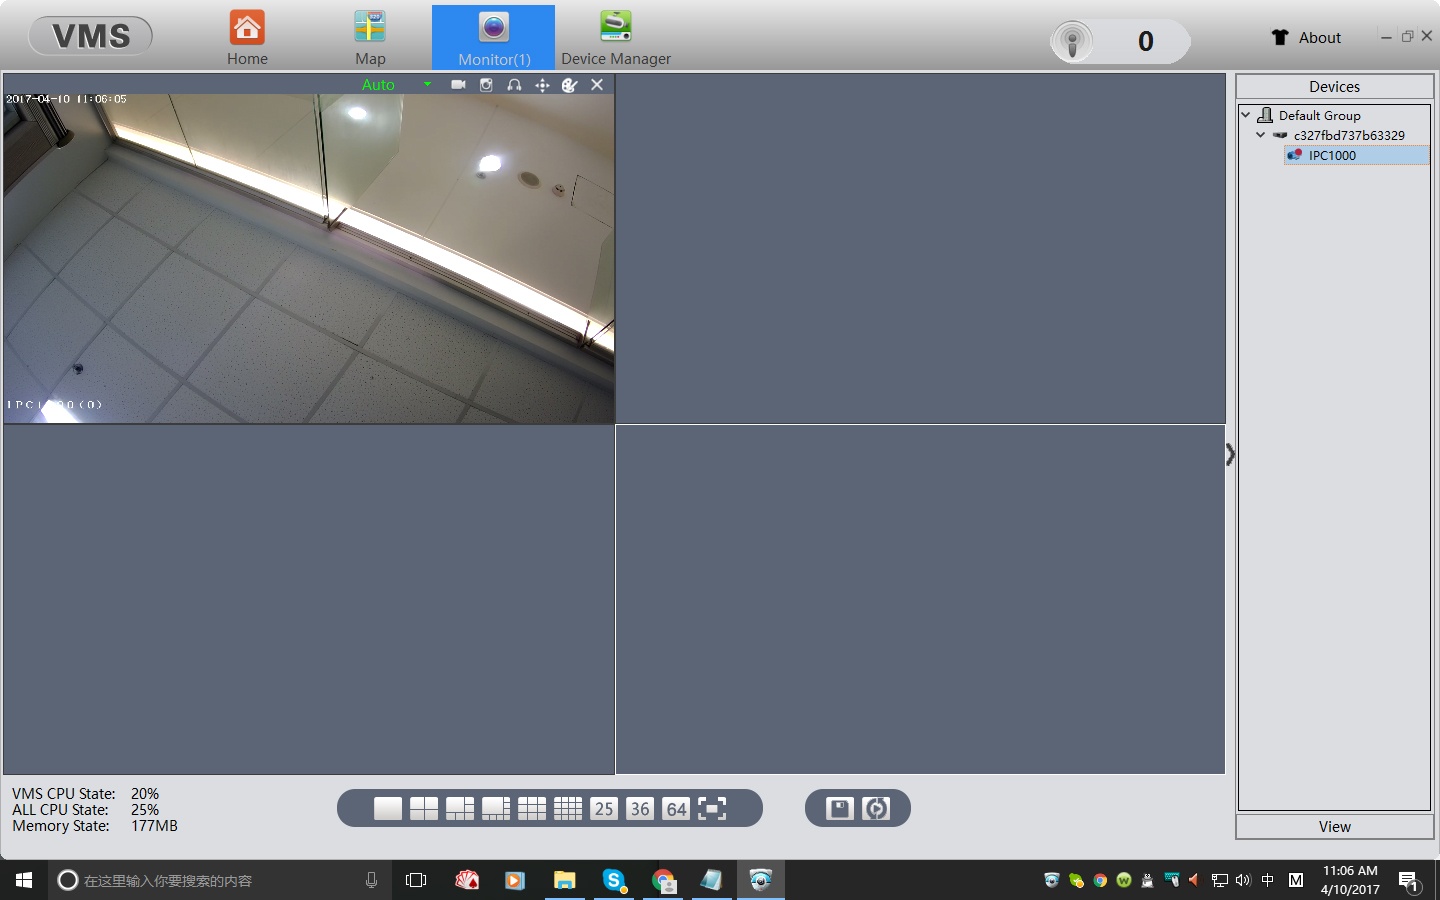 mac ip cam software